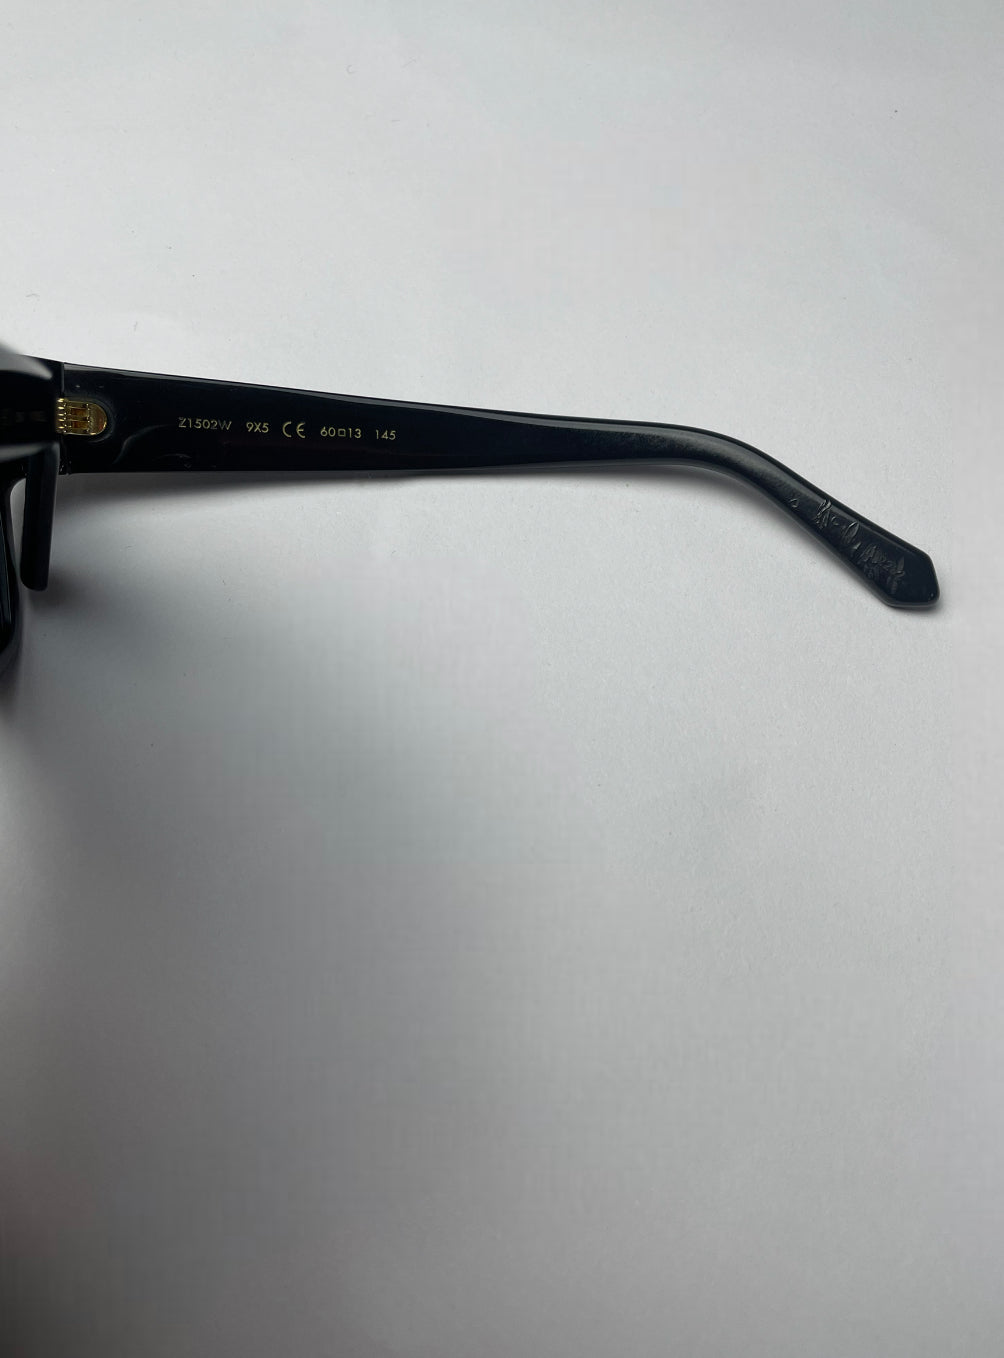 Lv evidence sunglasses brand new, Accessories